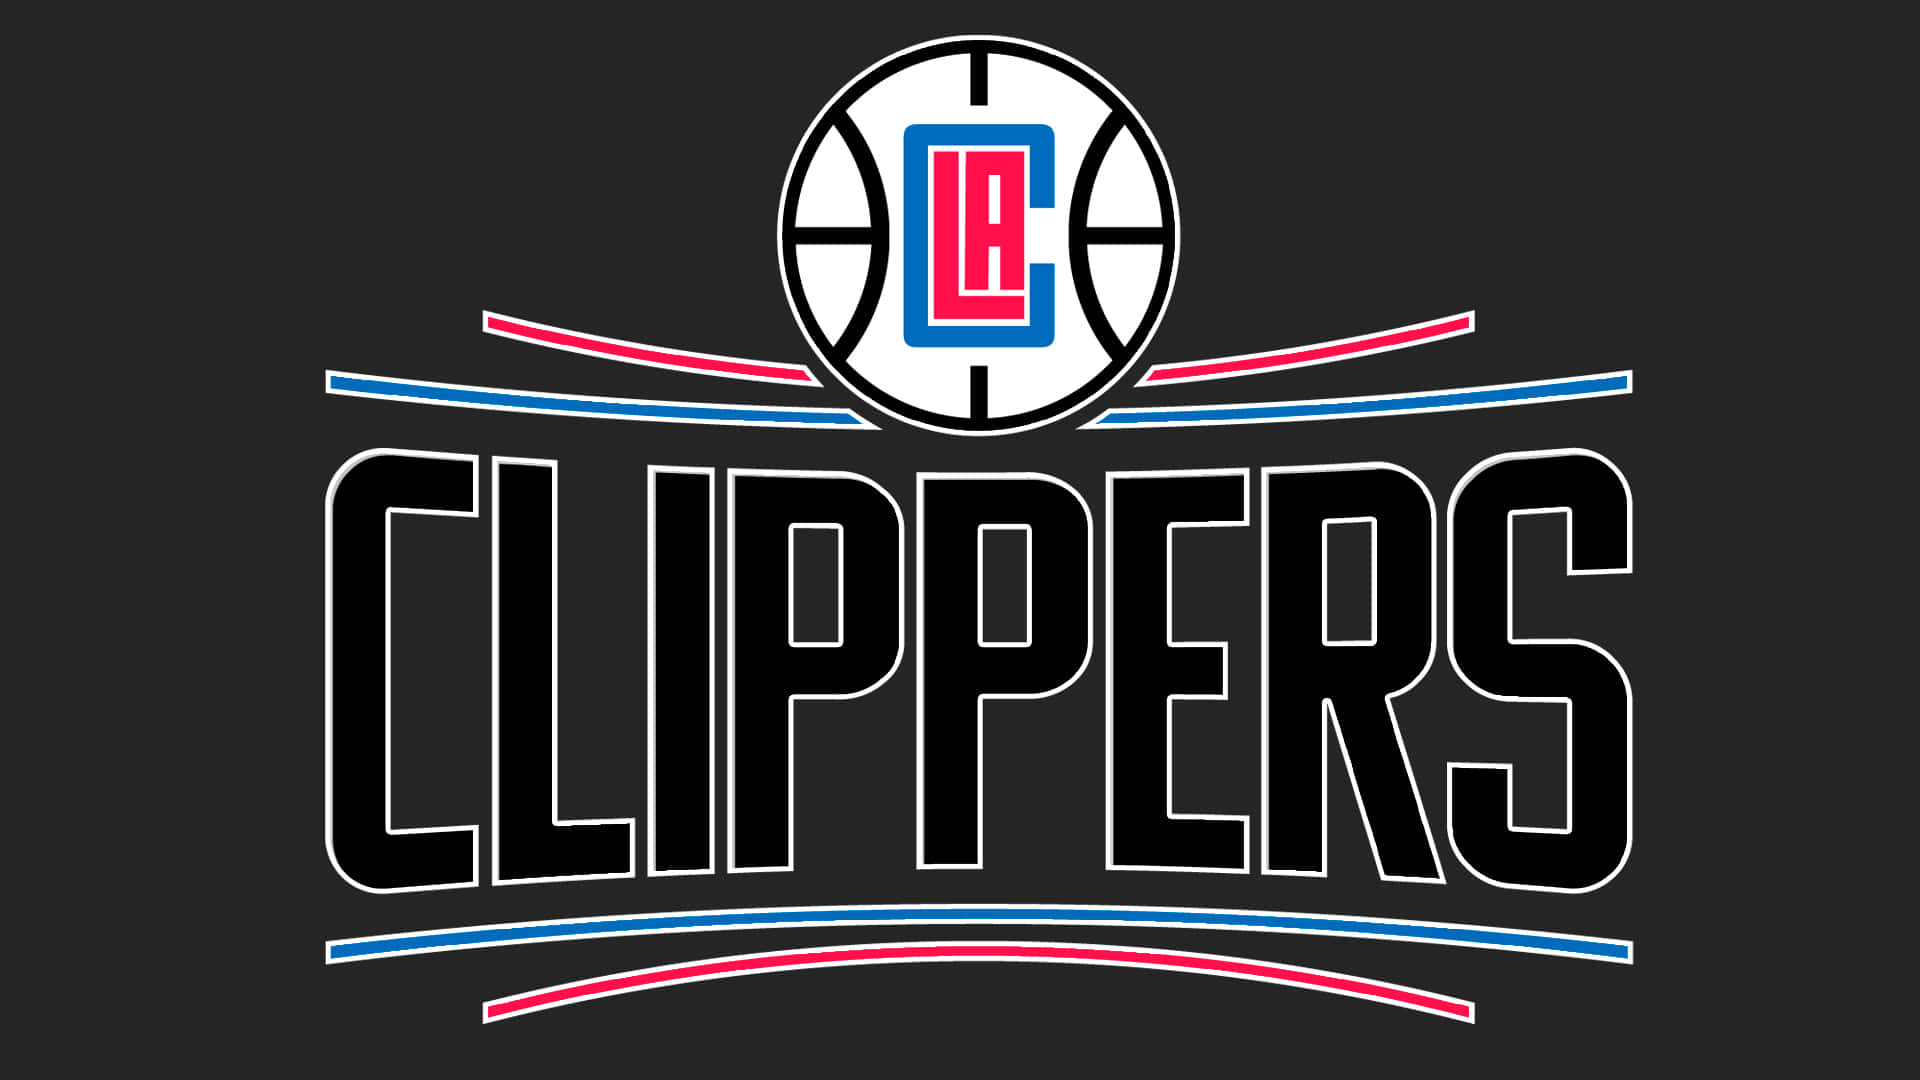 La Clippers Pictures Wallpaper